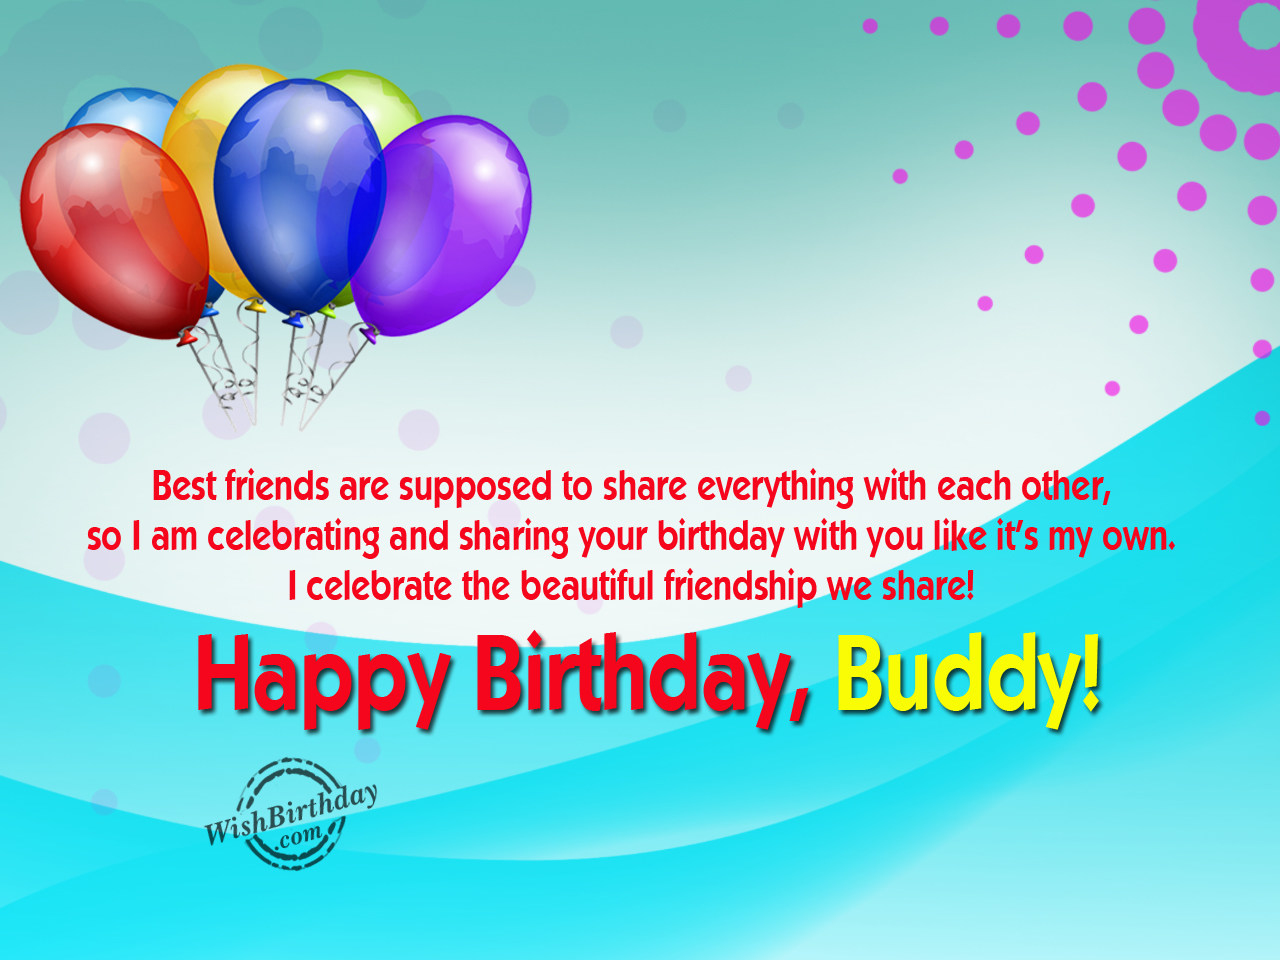 Birthday Wishes To Buddy